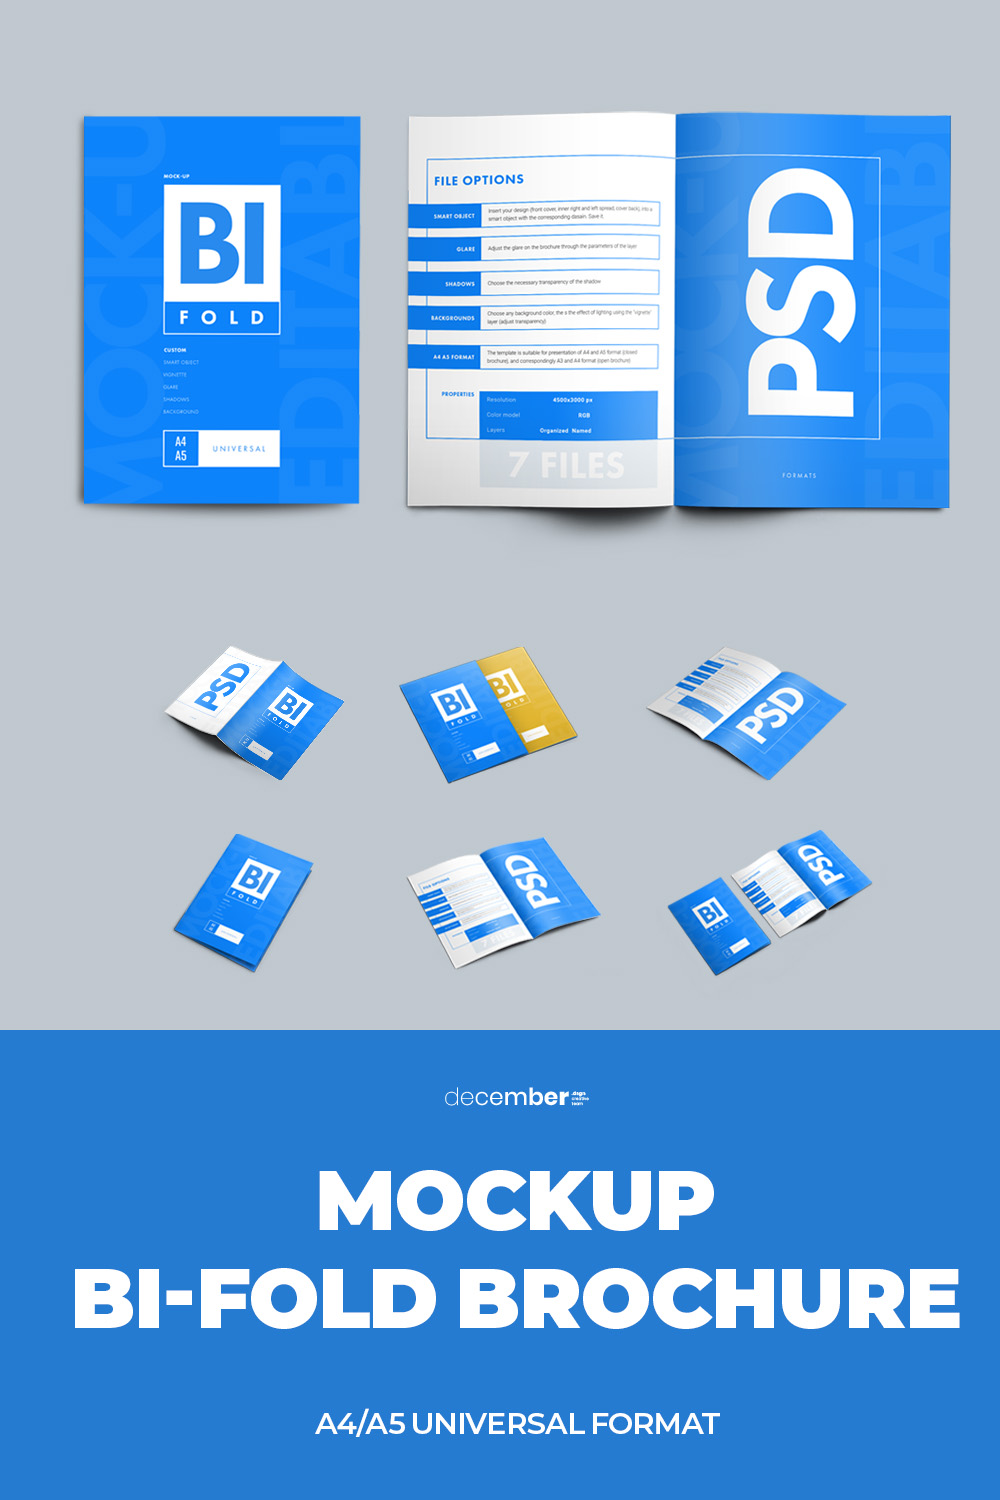 7 Mockup Bi Fold Brochures Pinterest Image.